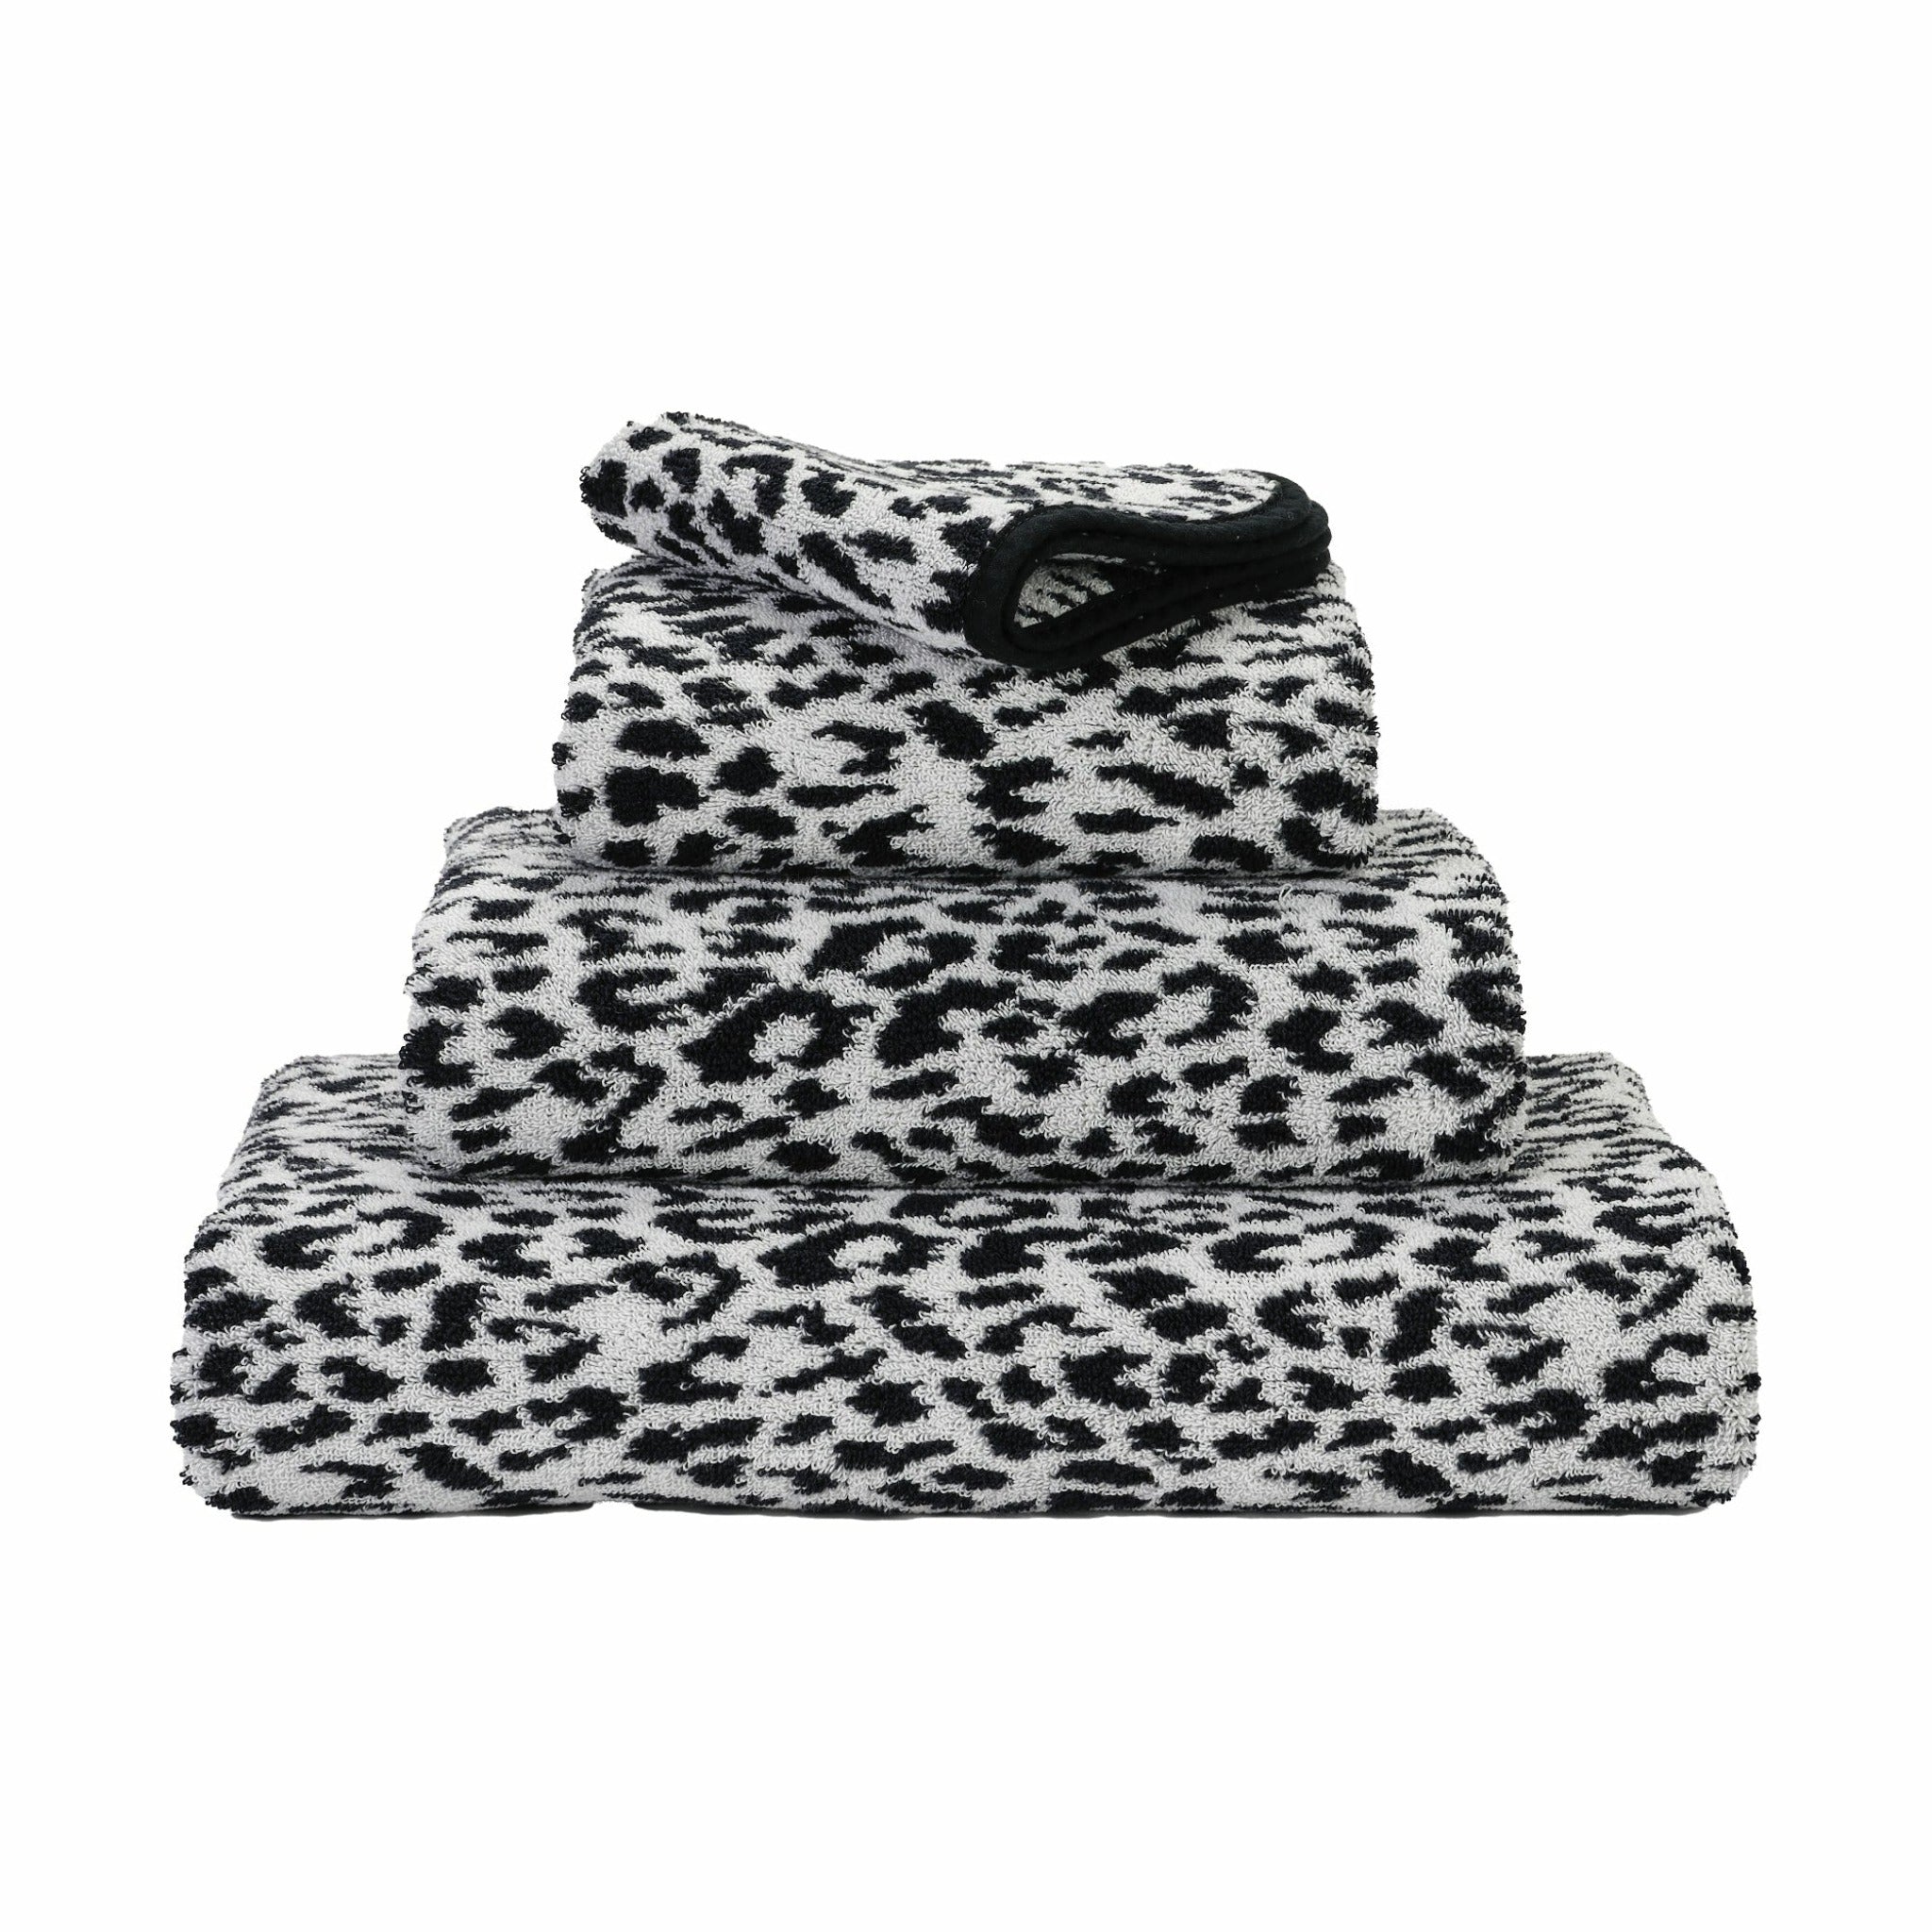 Leopard Towel Black